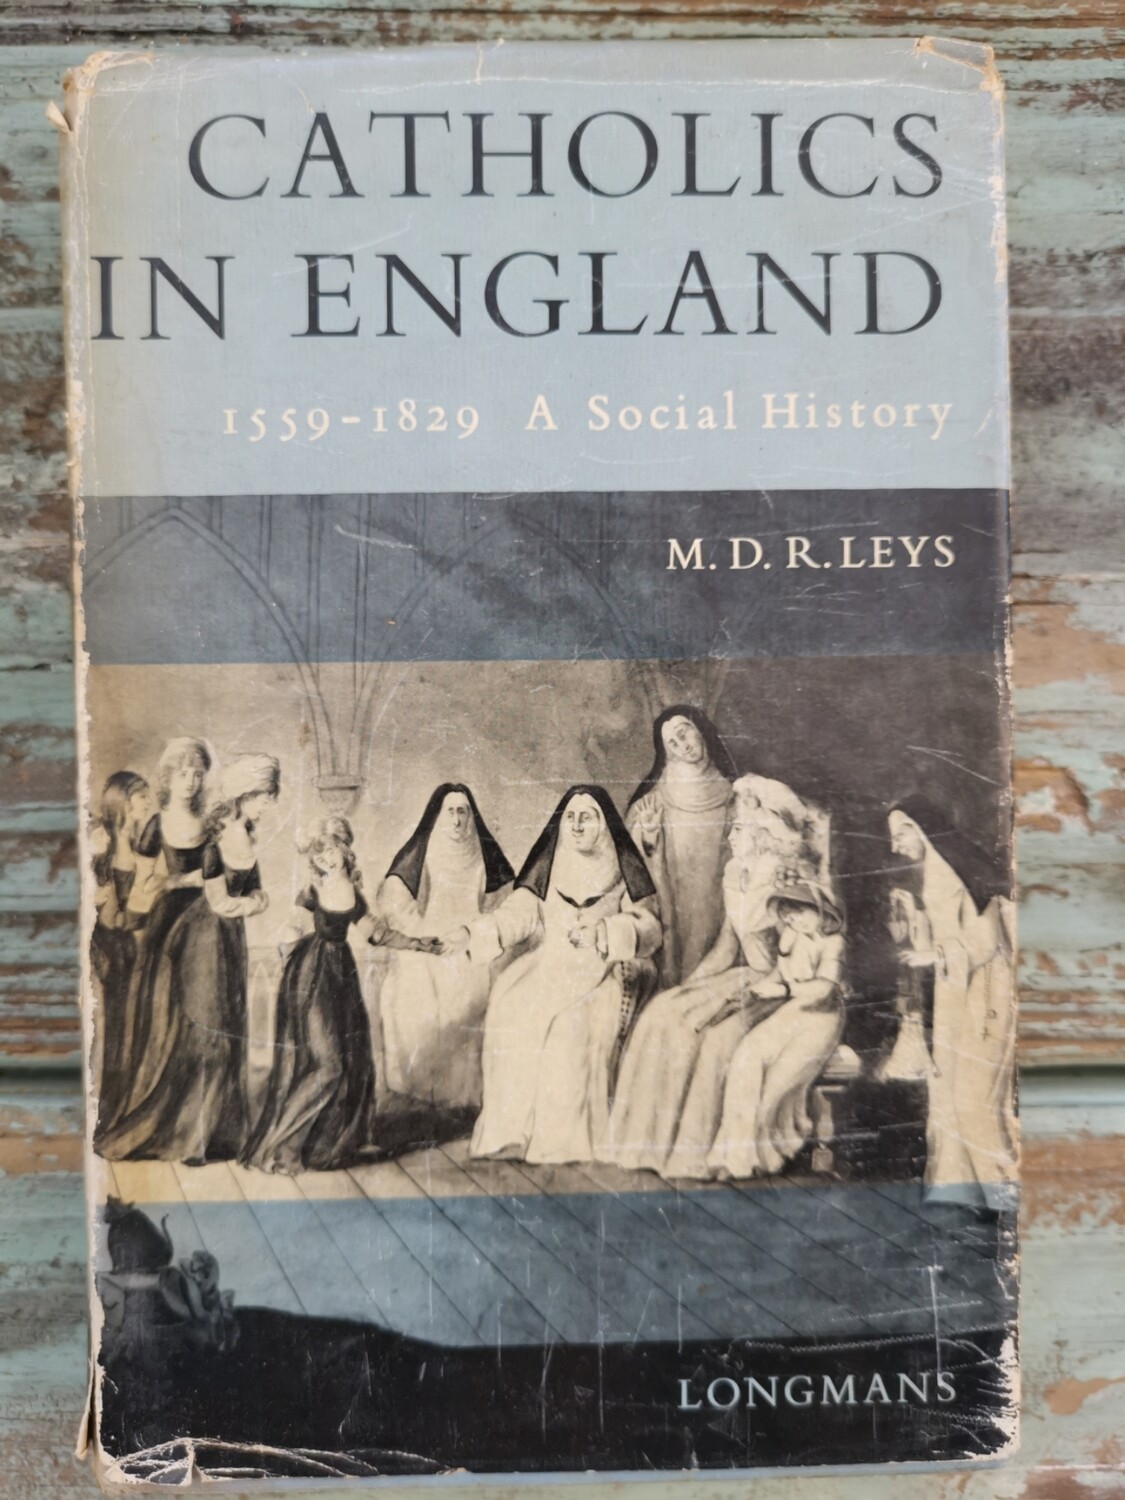 Catholics in England, M. D. R. Leys